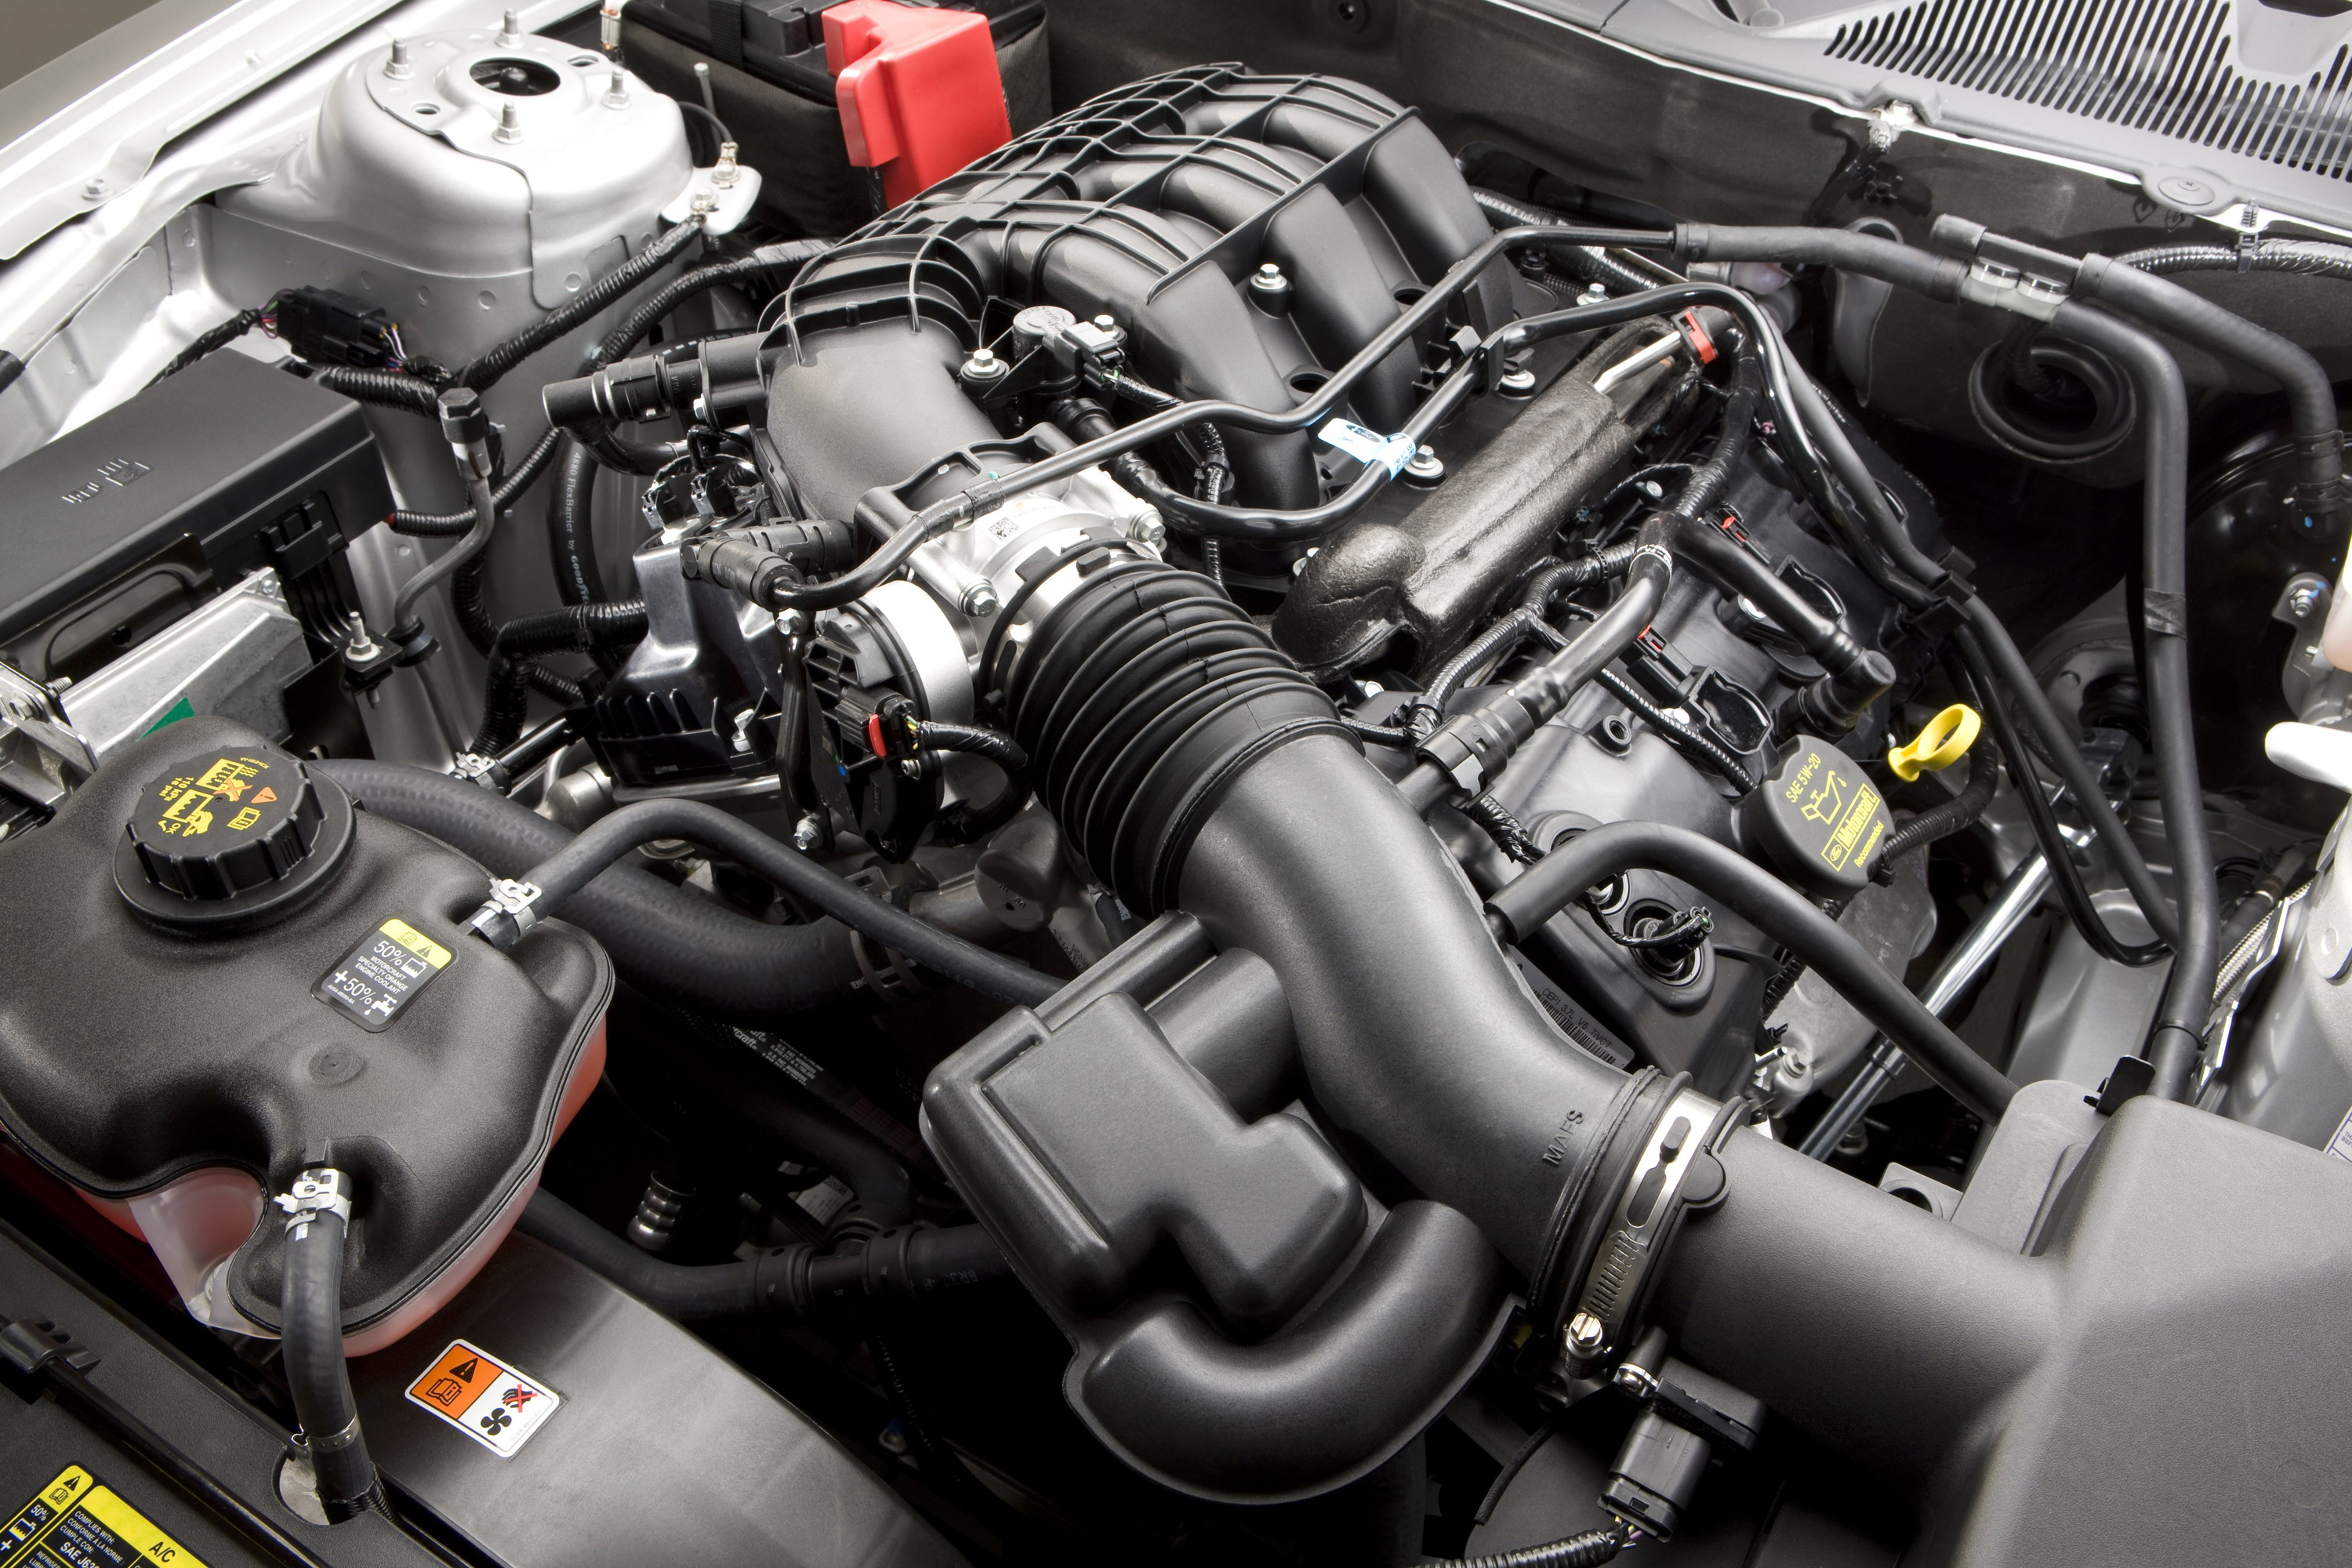 2012 Mustang Engine Information & Specs - 227 Duratec V6 Engine (3.7L)